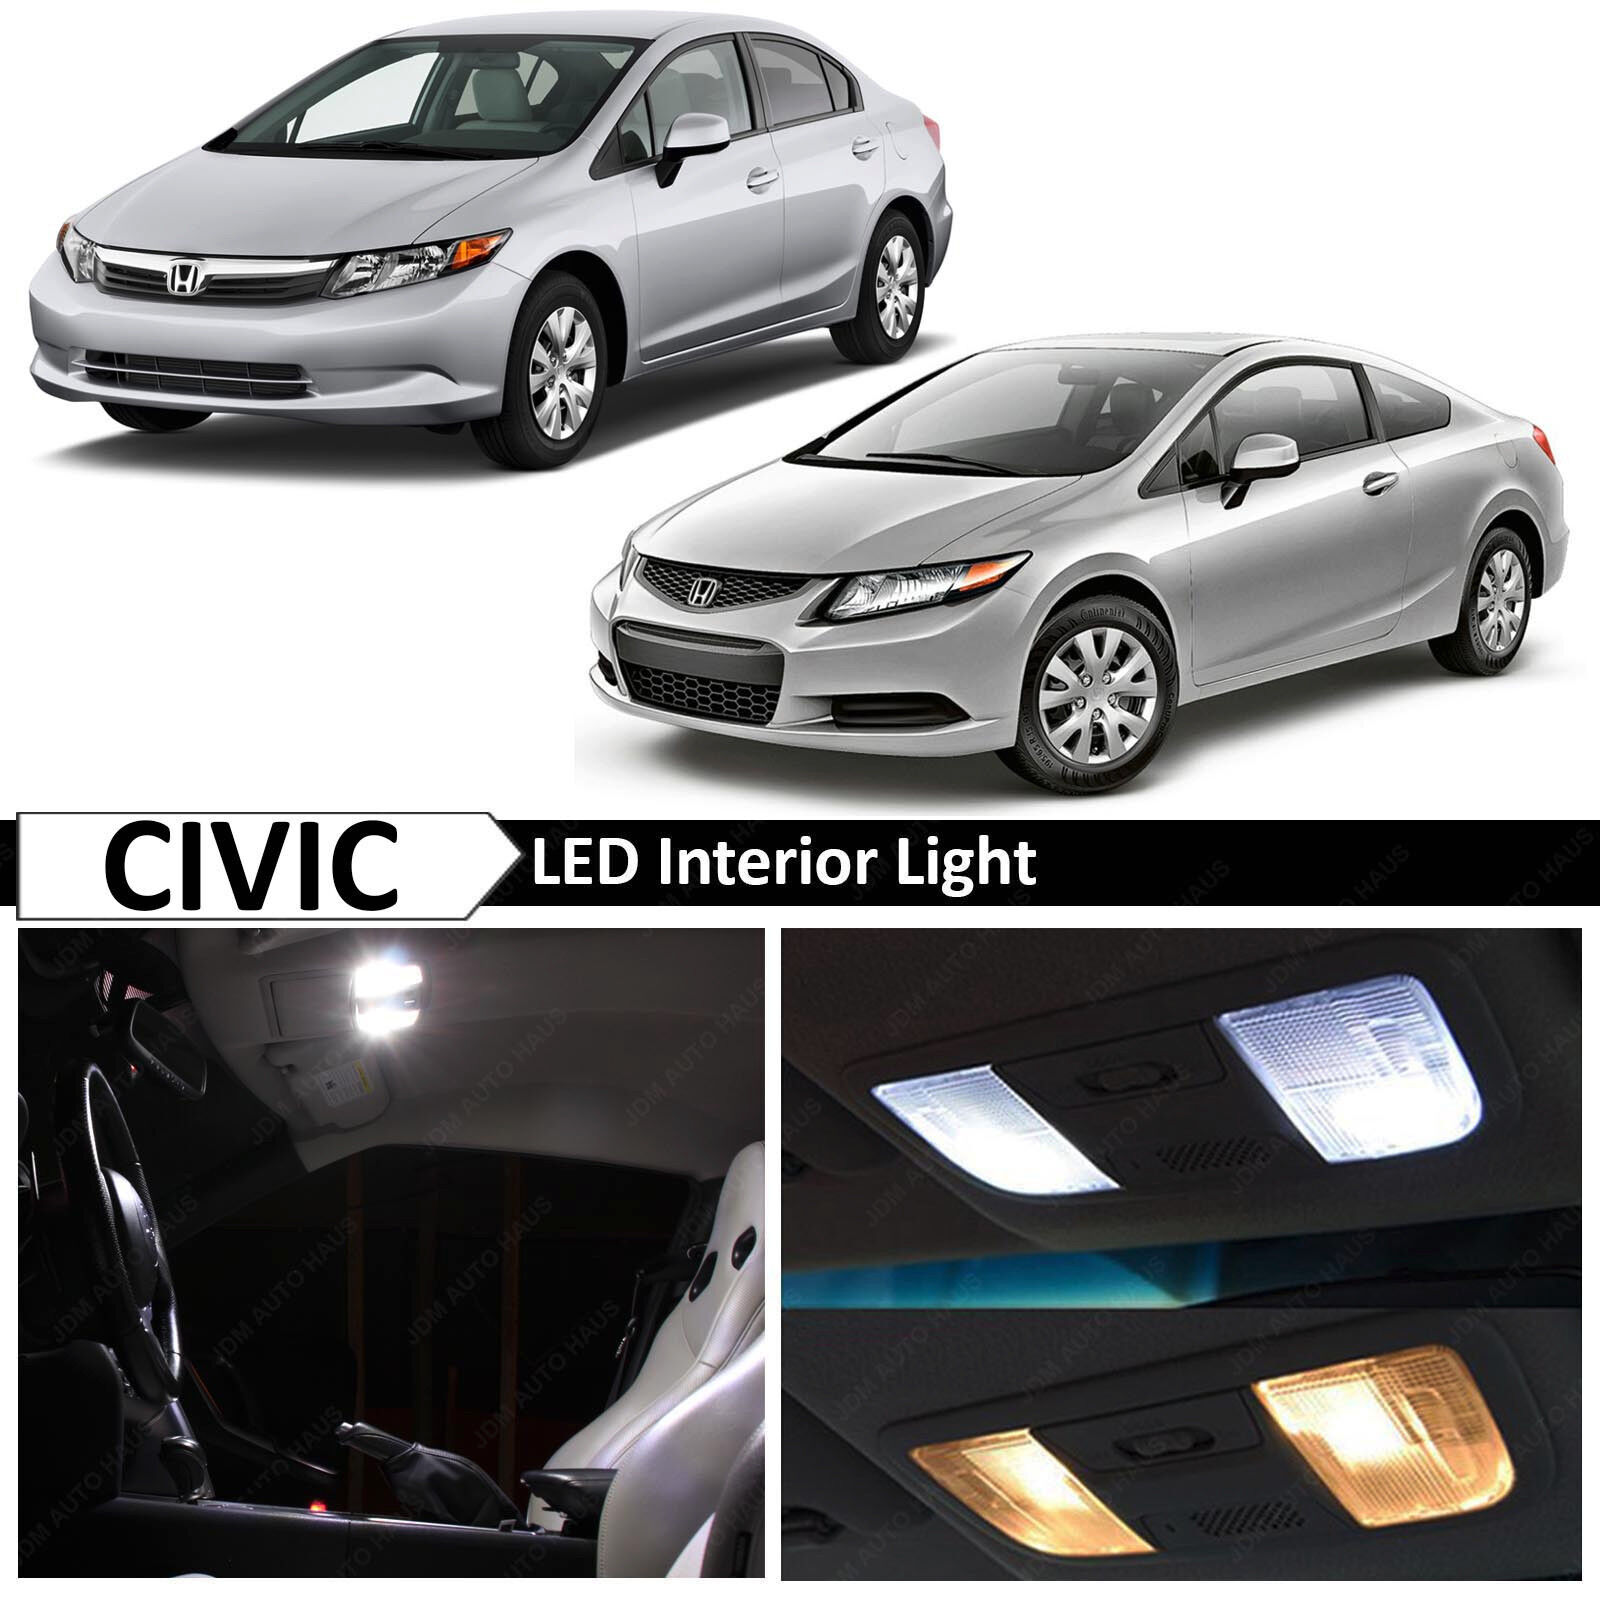 8x Bulb White Interior LED Lights Package Fits Honda Civic 2006-2012 Sedan Coupe